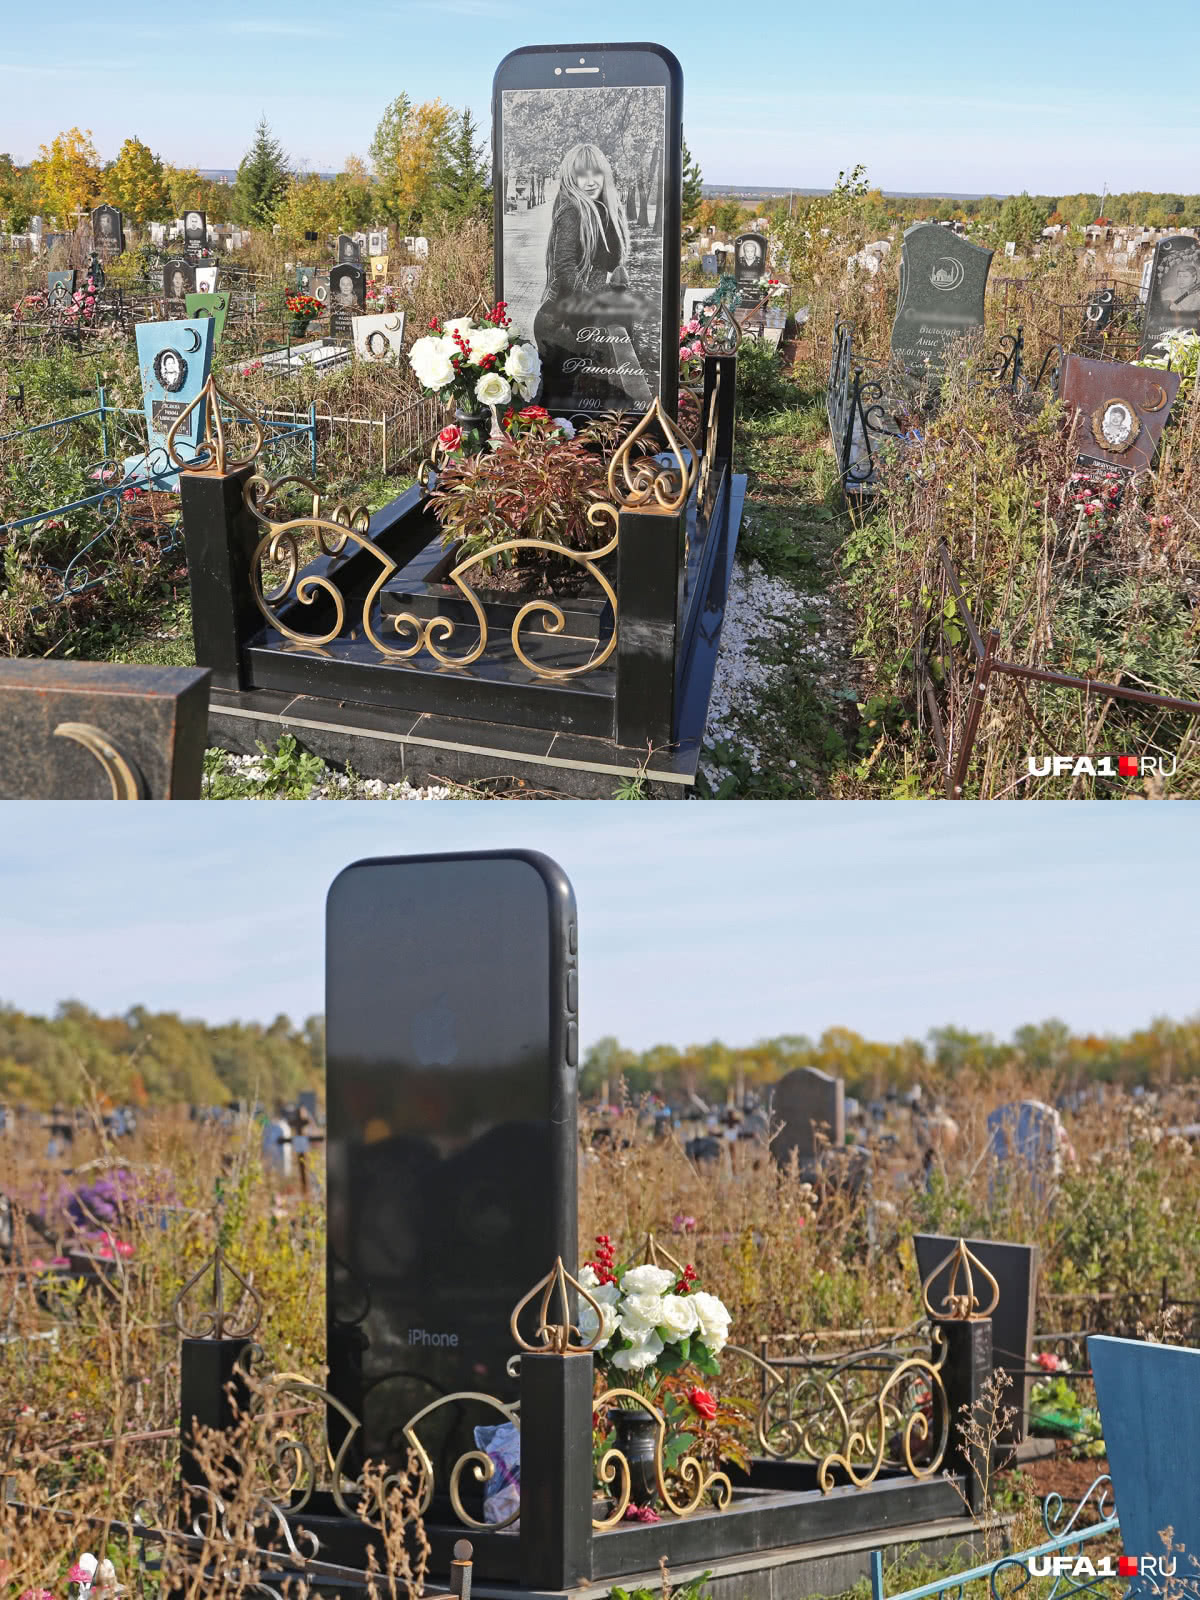 Une pierre tombale en forme d'iPhone